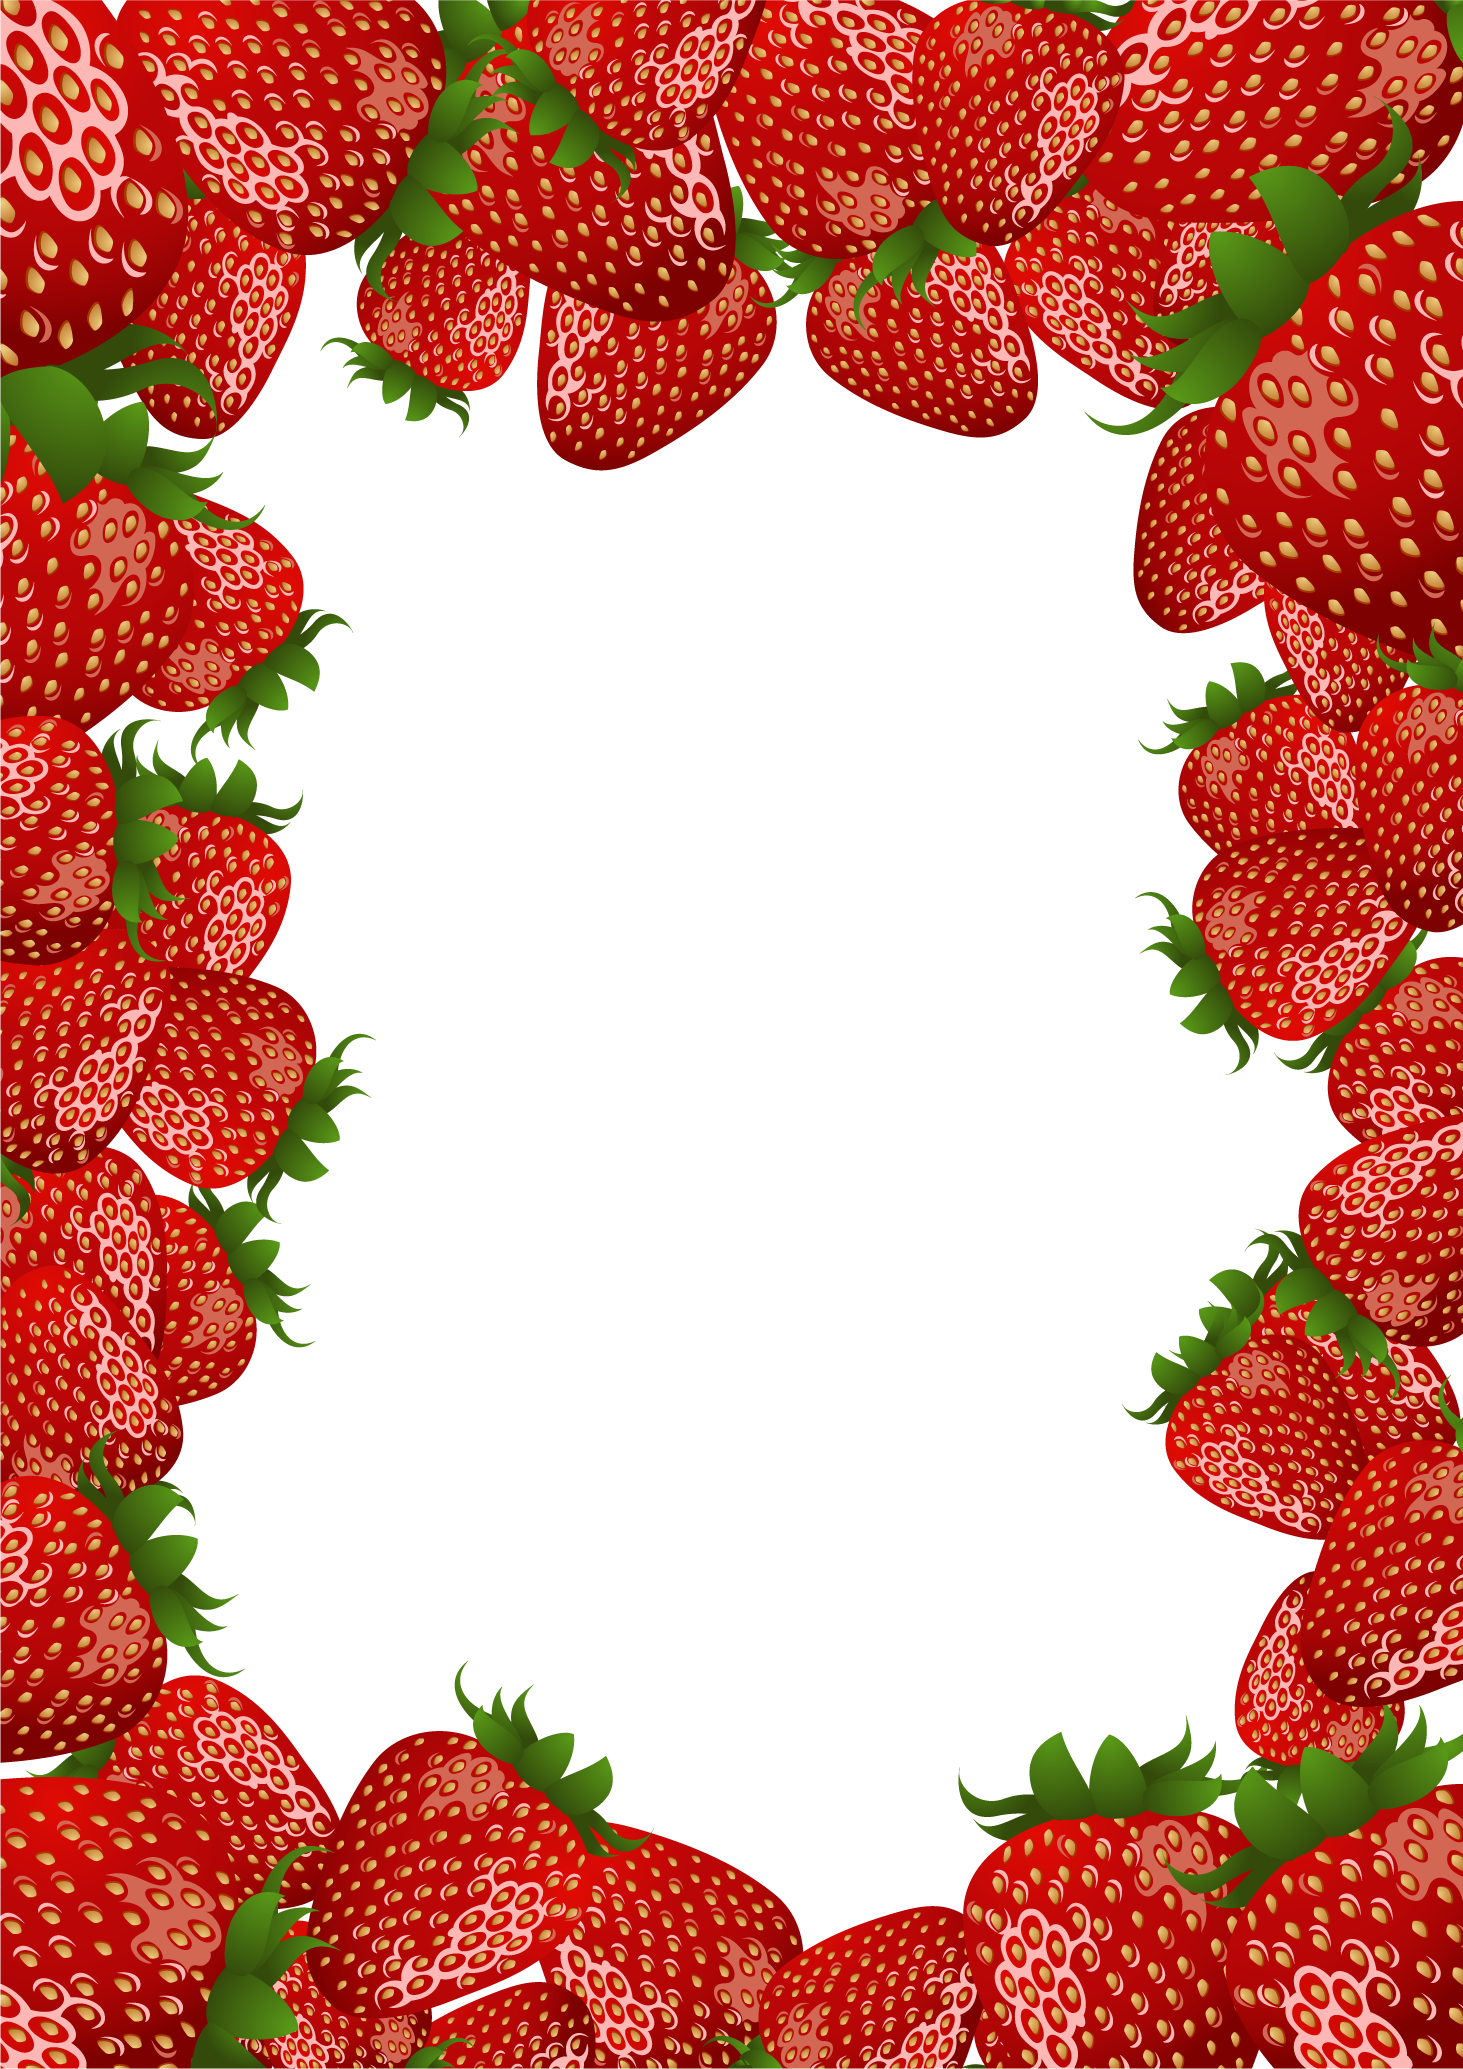 Strawberry border clipart 2 WikiClipArt